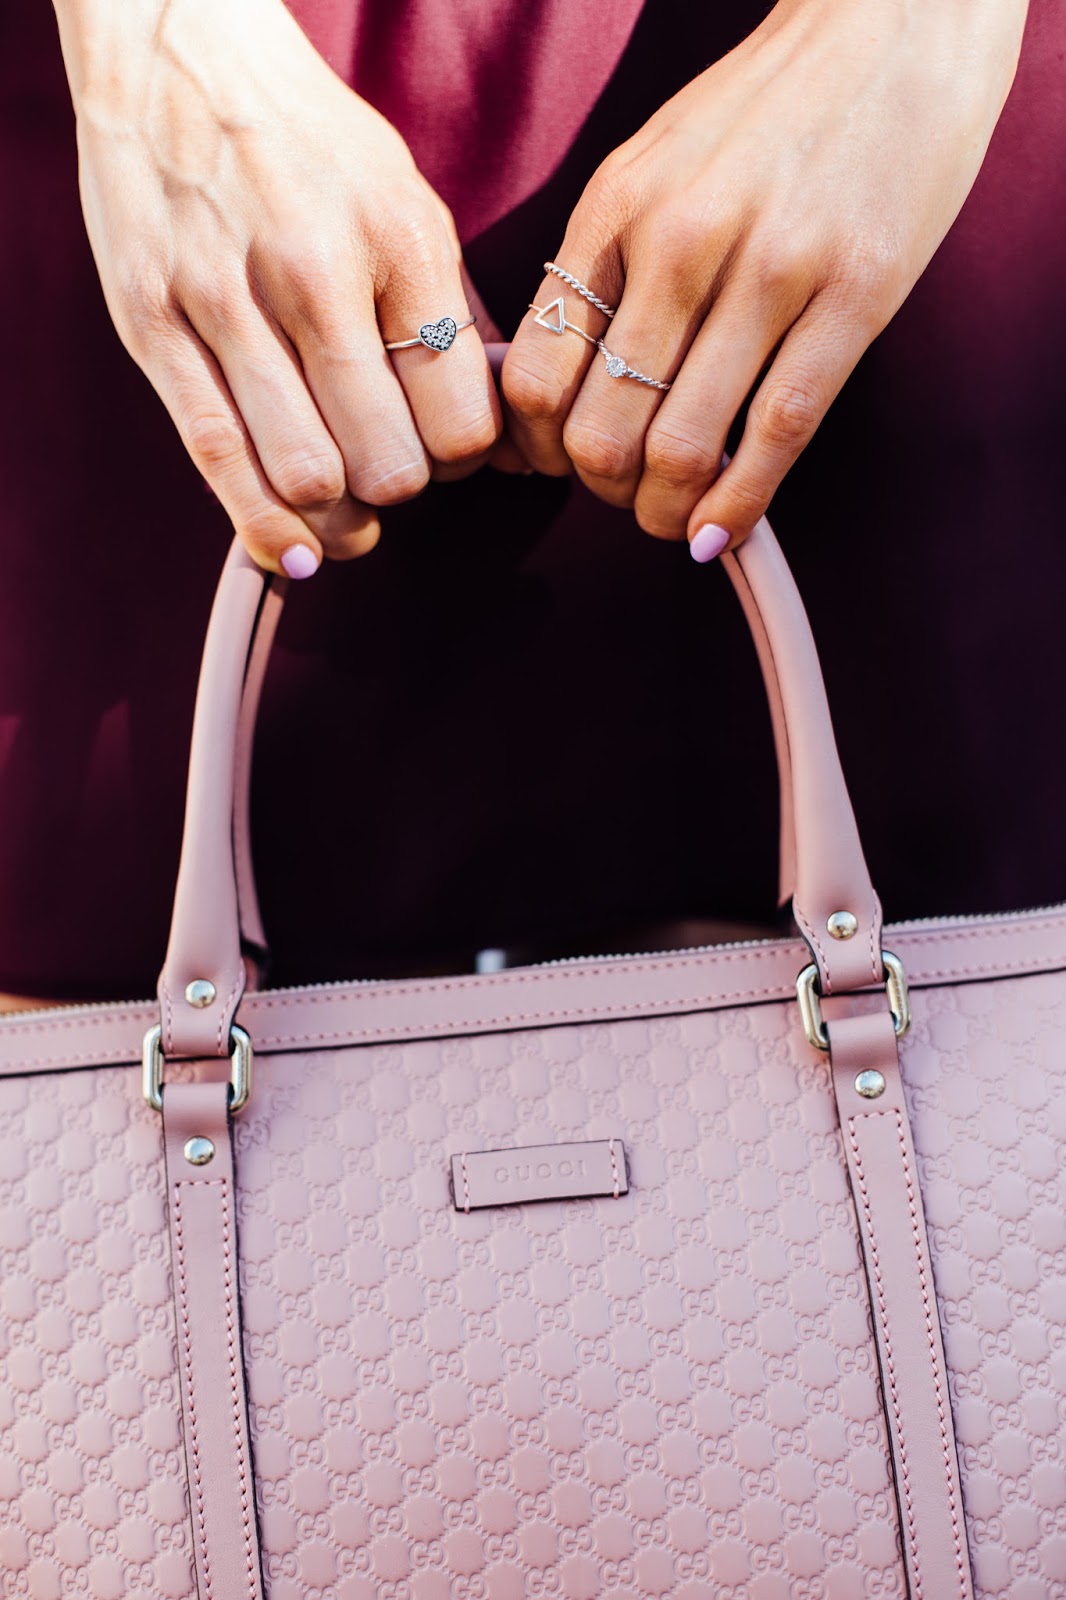 Gucci Signature Top Leather Handbag in pink close up, Guccisimma print 